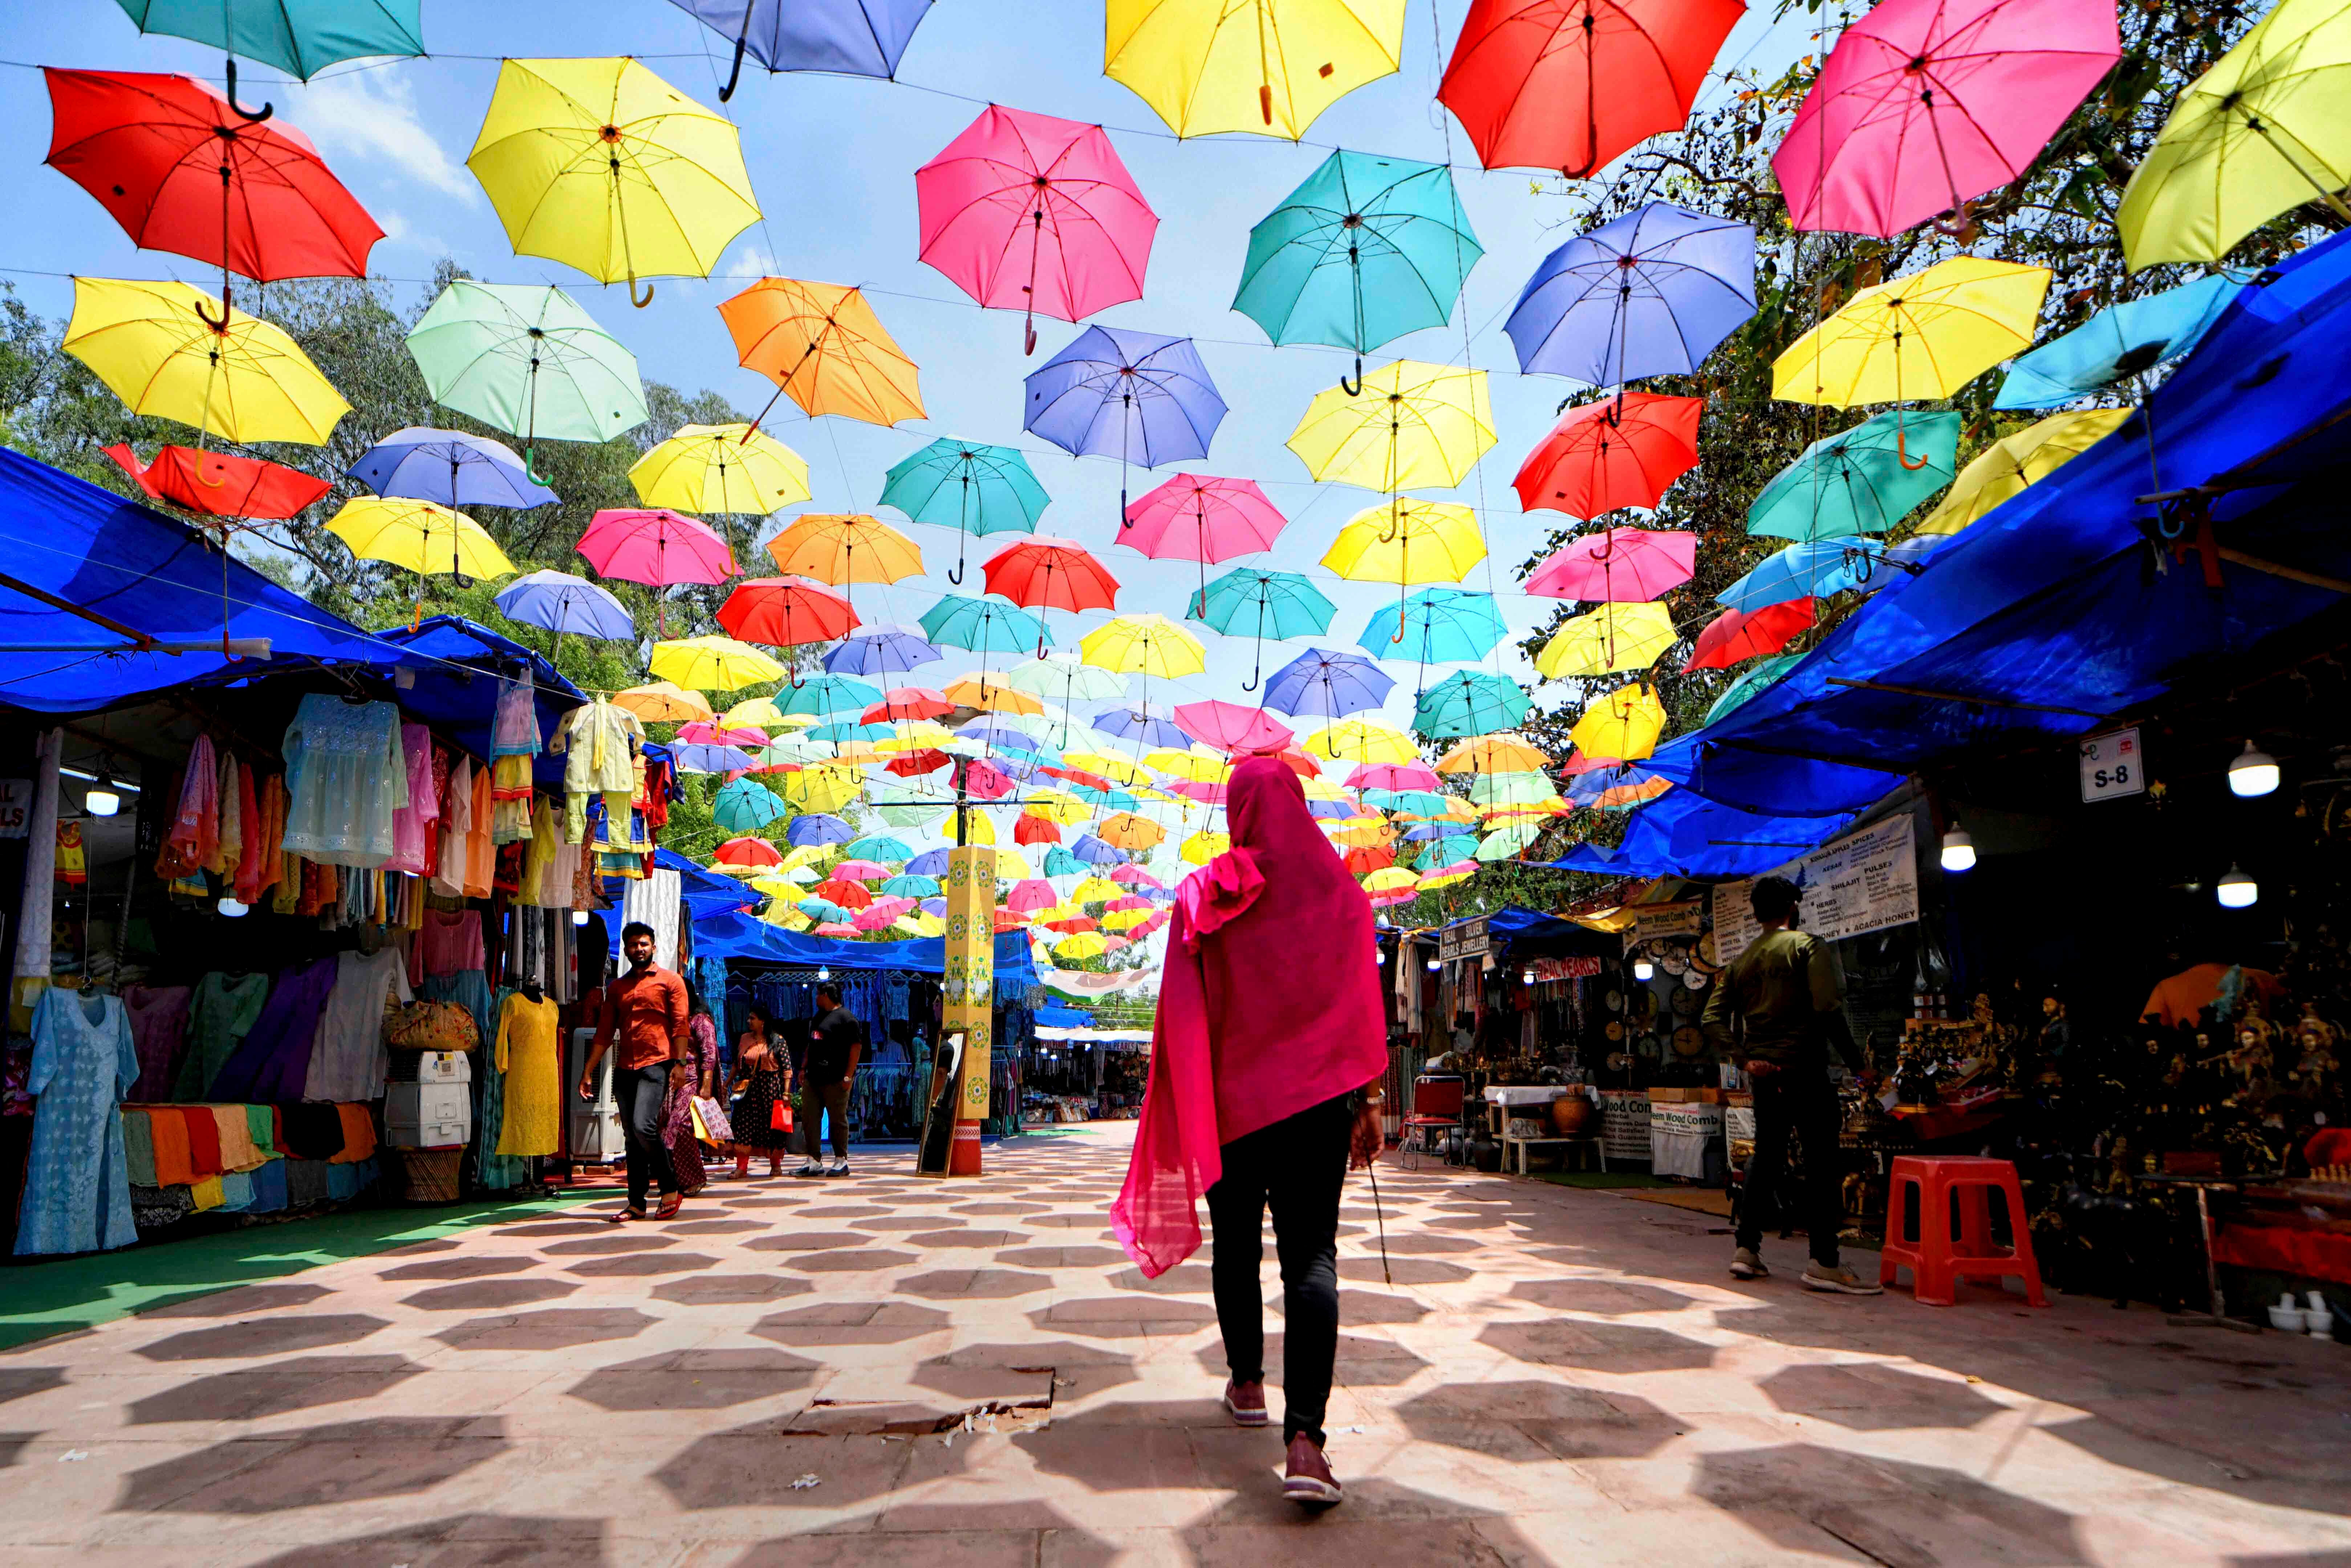 Umbrellas in open air market. 